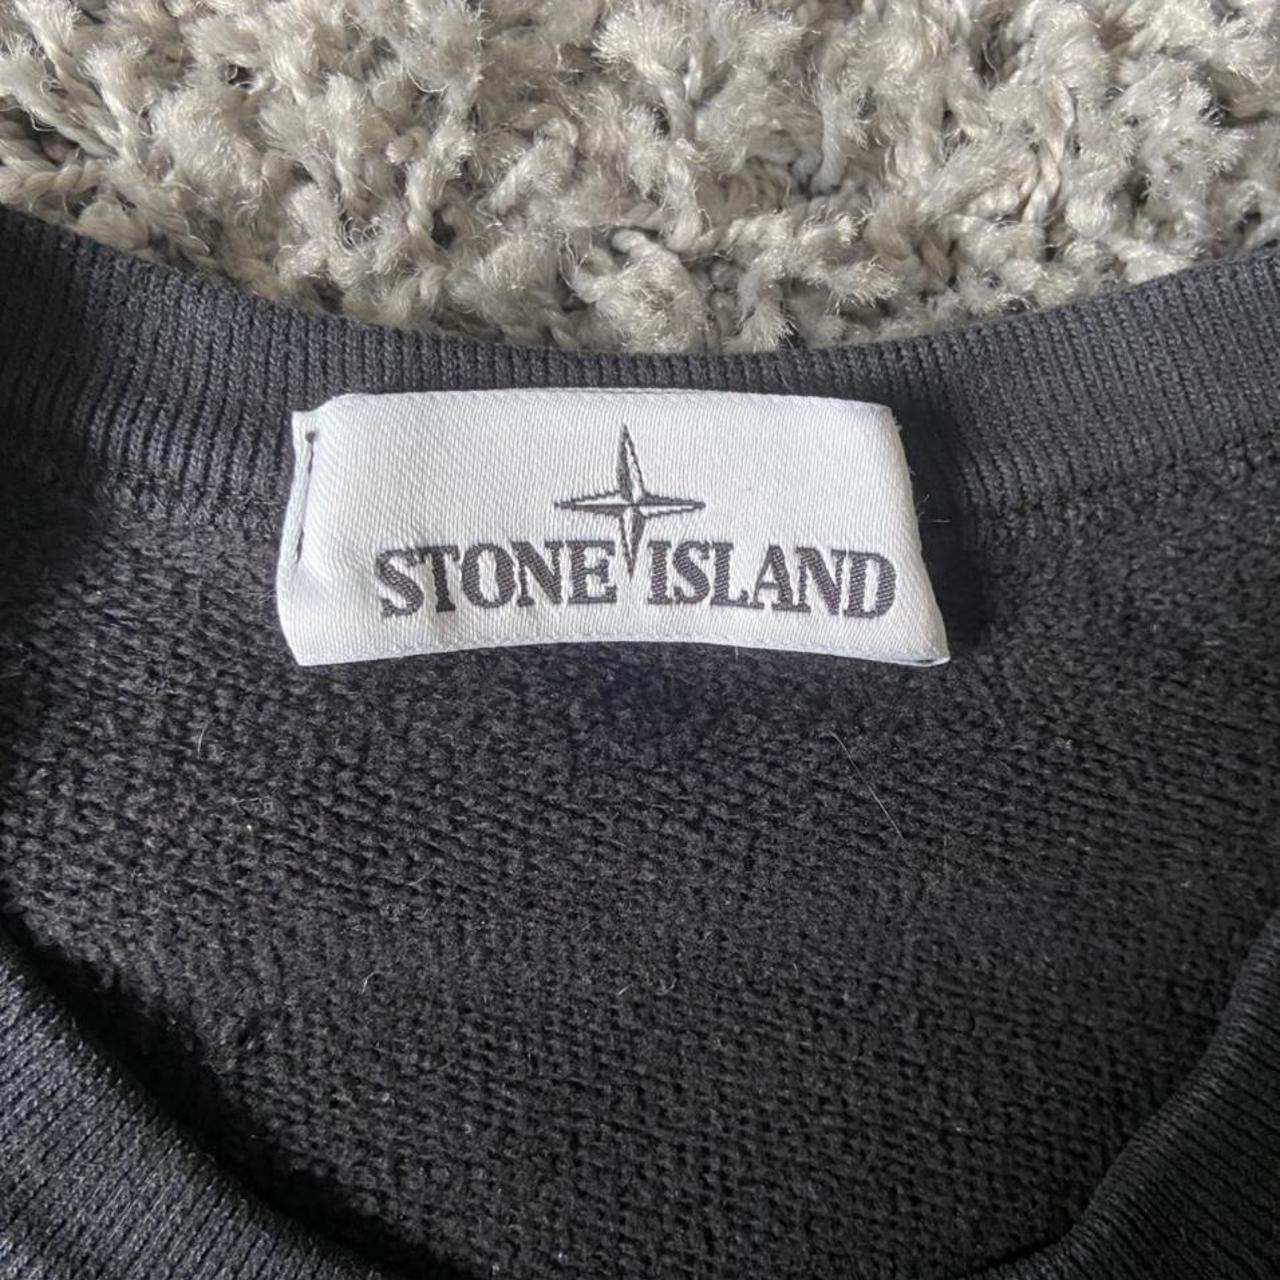 stone island jumper // standard garm tbf // only... - Depop